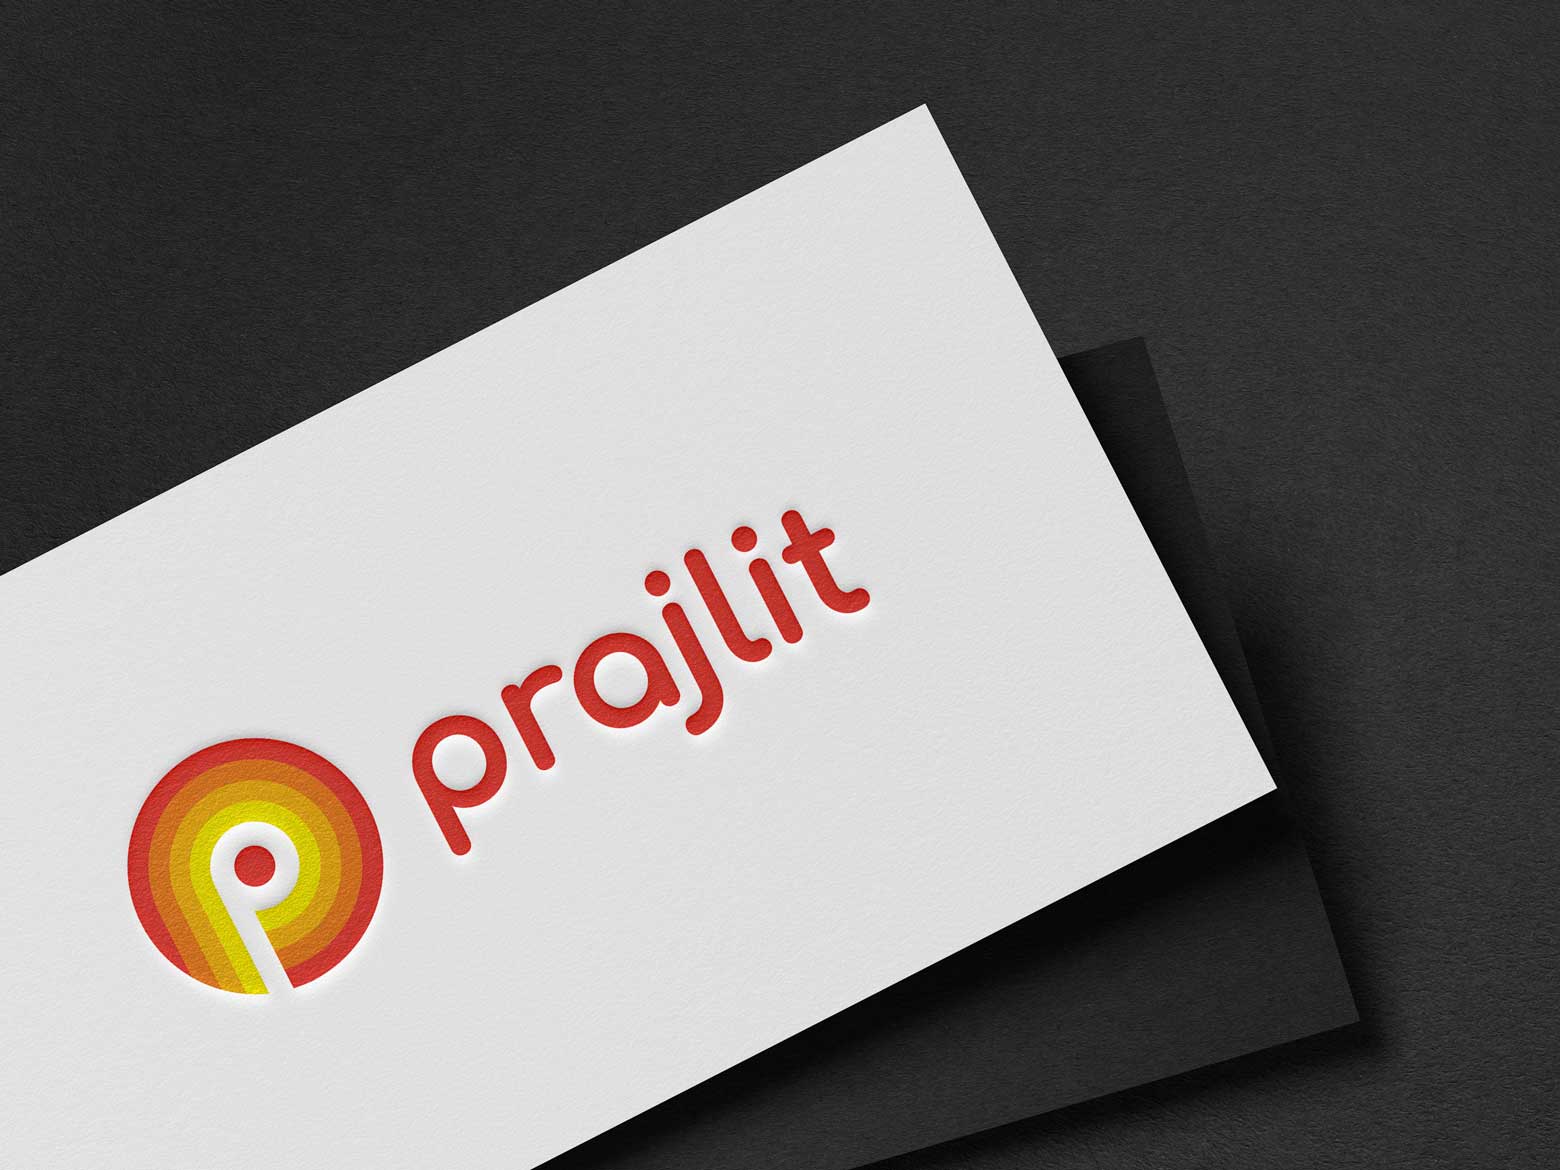 Prajlit branding by StudioD